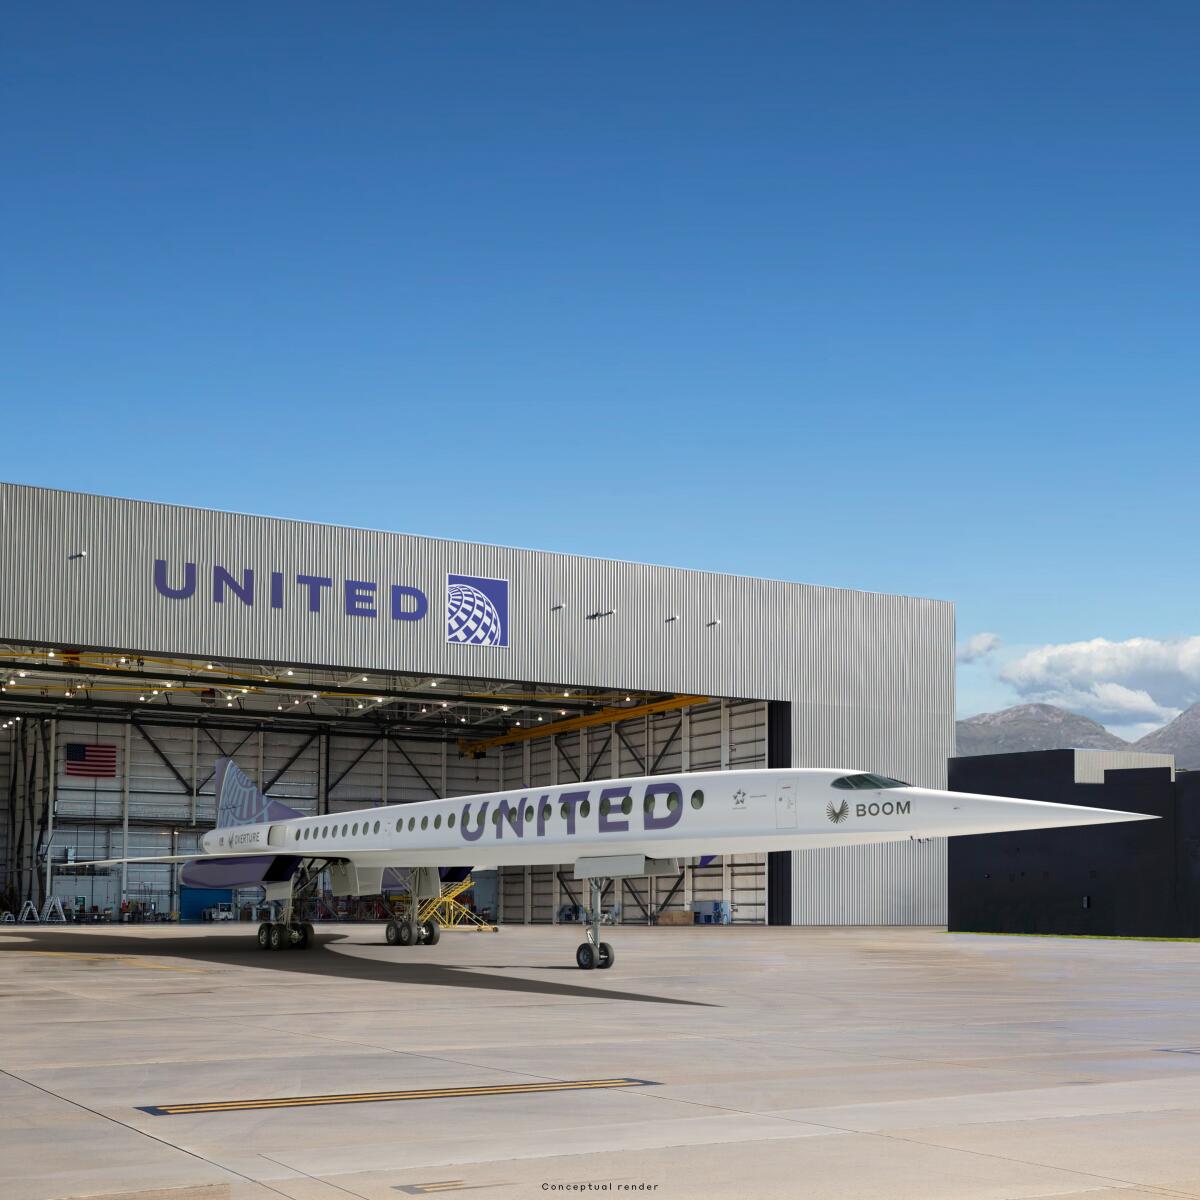 An artist’s rendition of a United Airlines jet near a hangar